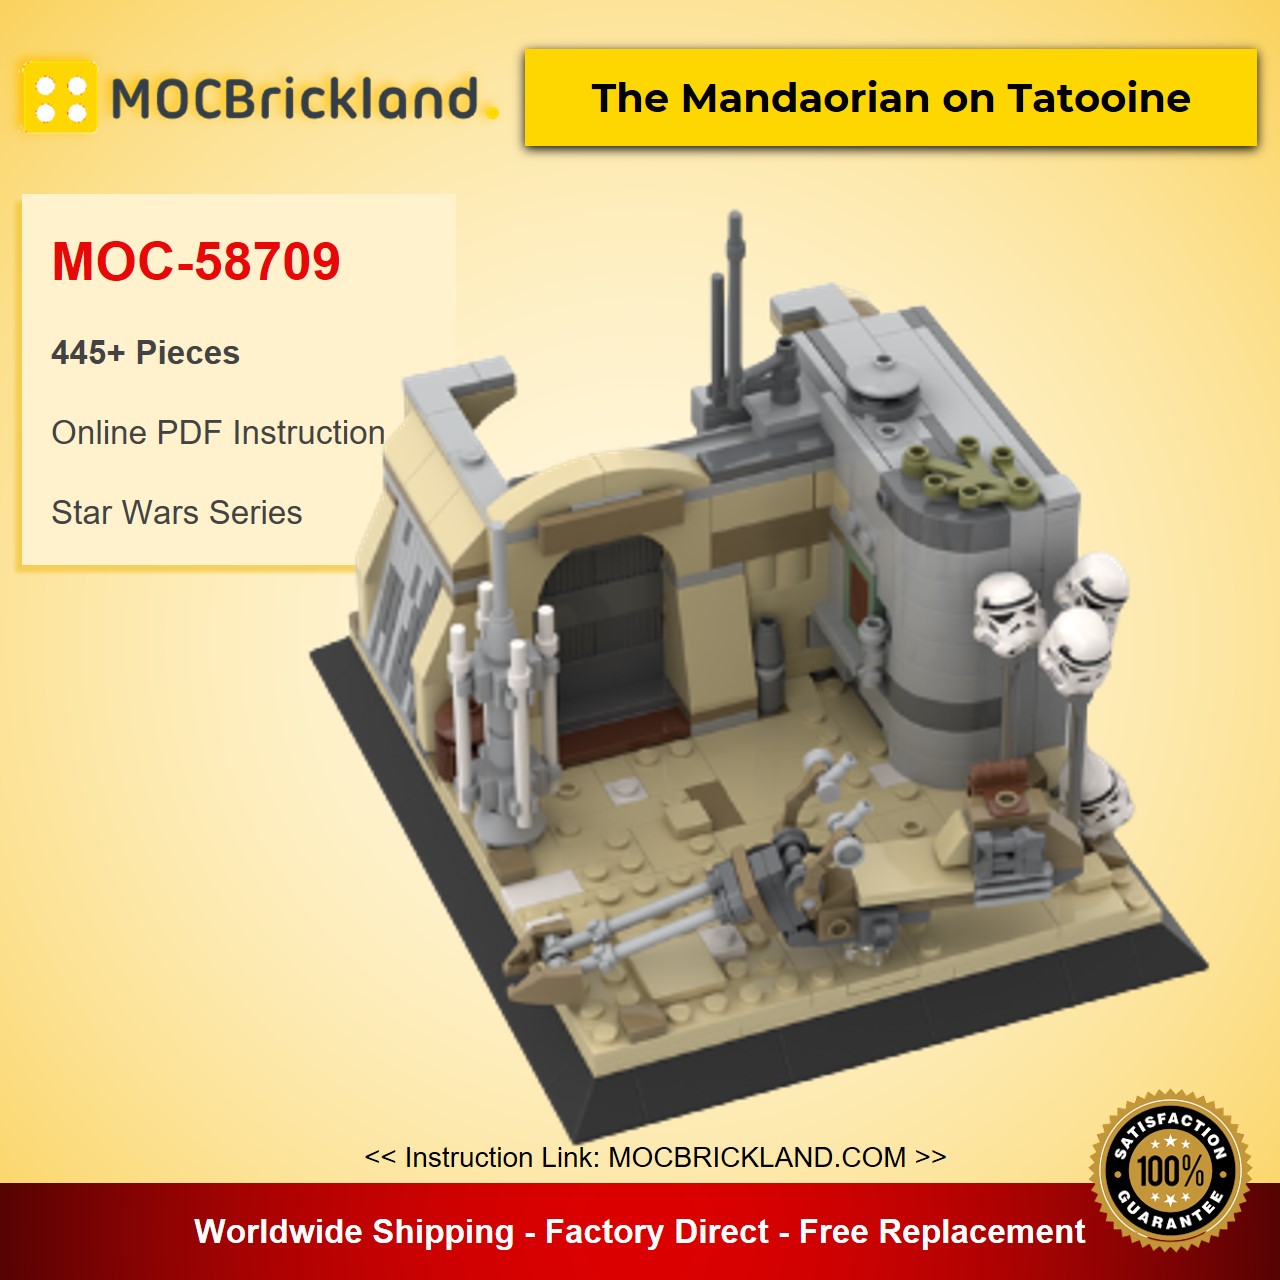 MOCBRICKLAND MOC-58709 The Mandaorian on Tatooine